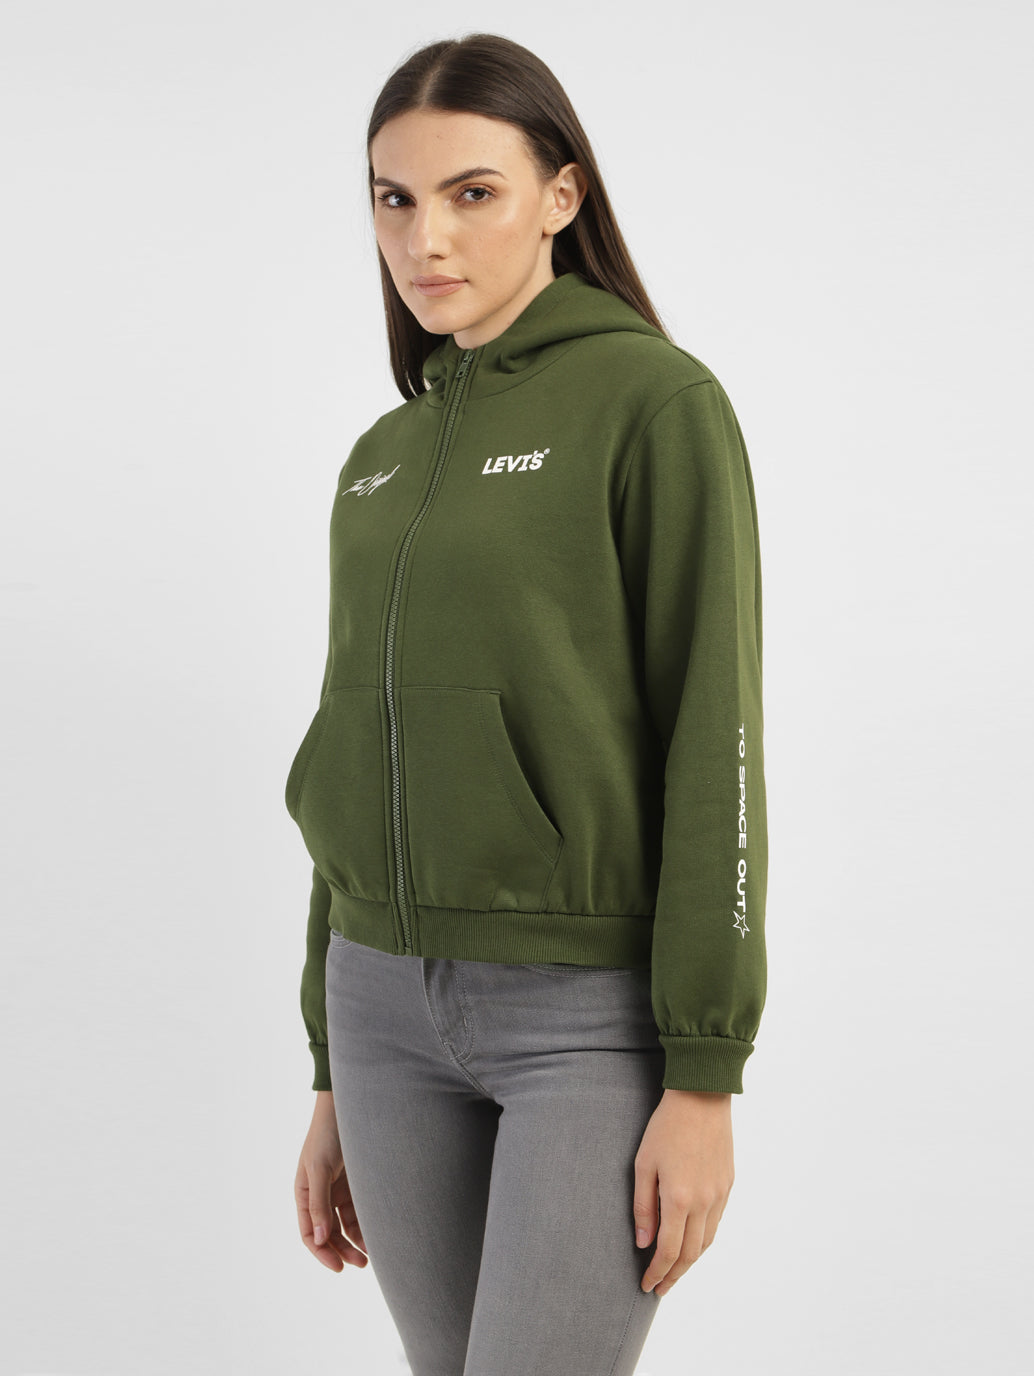 Women's Alphanumeric Print Green Hooded Sweatshirt